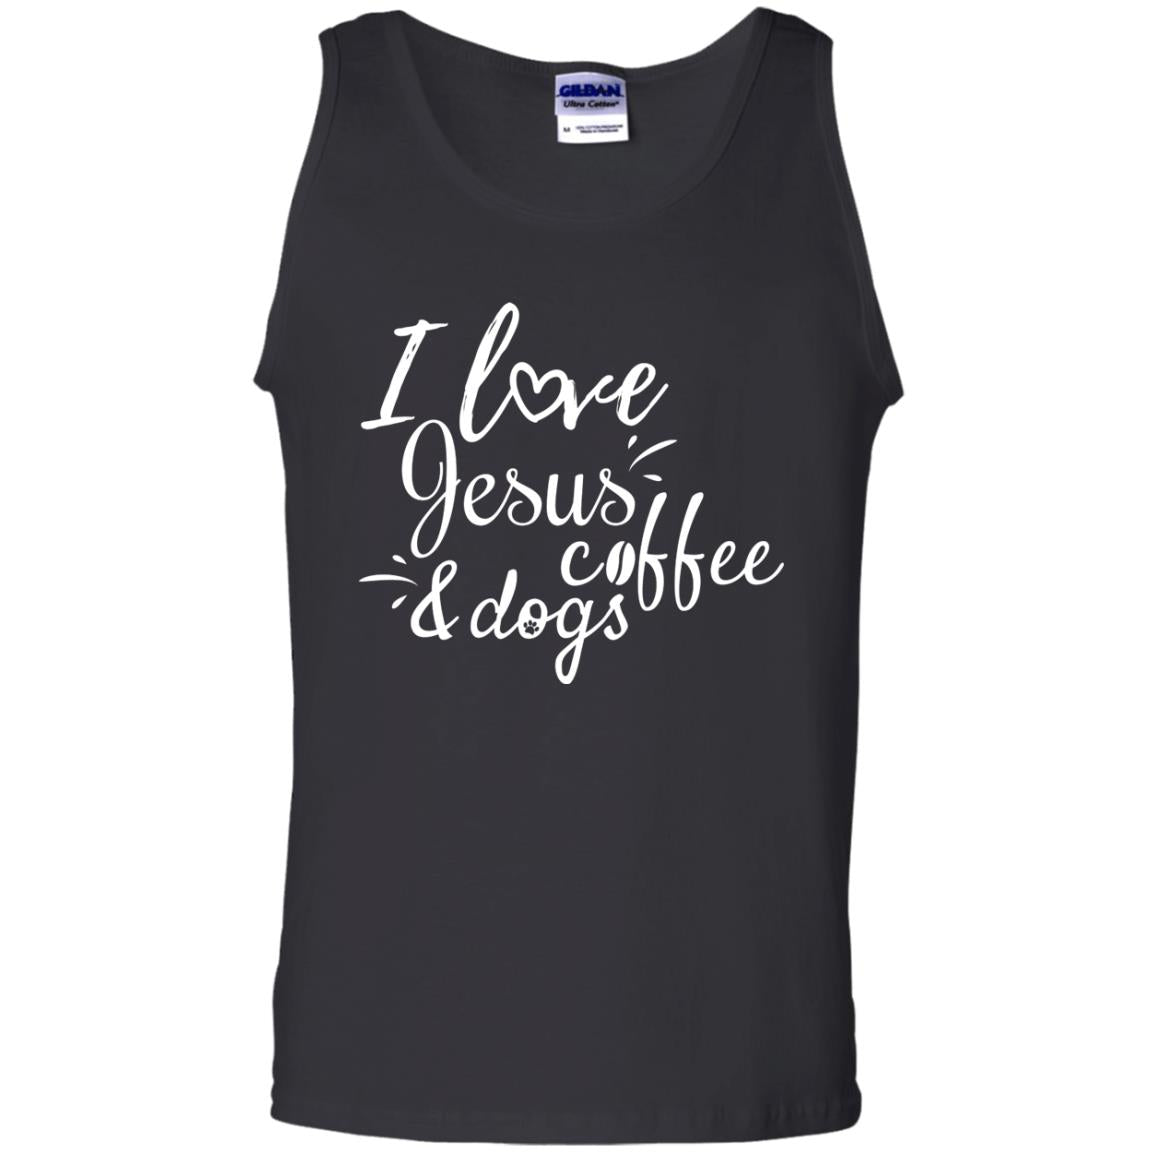 I Love Jesus Coffee And Dogs Christian T-shirtG220 Gildan 100% Cotton Tank Top